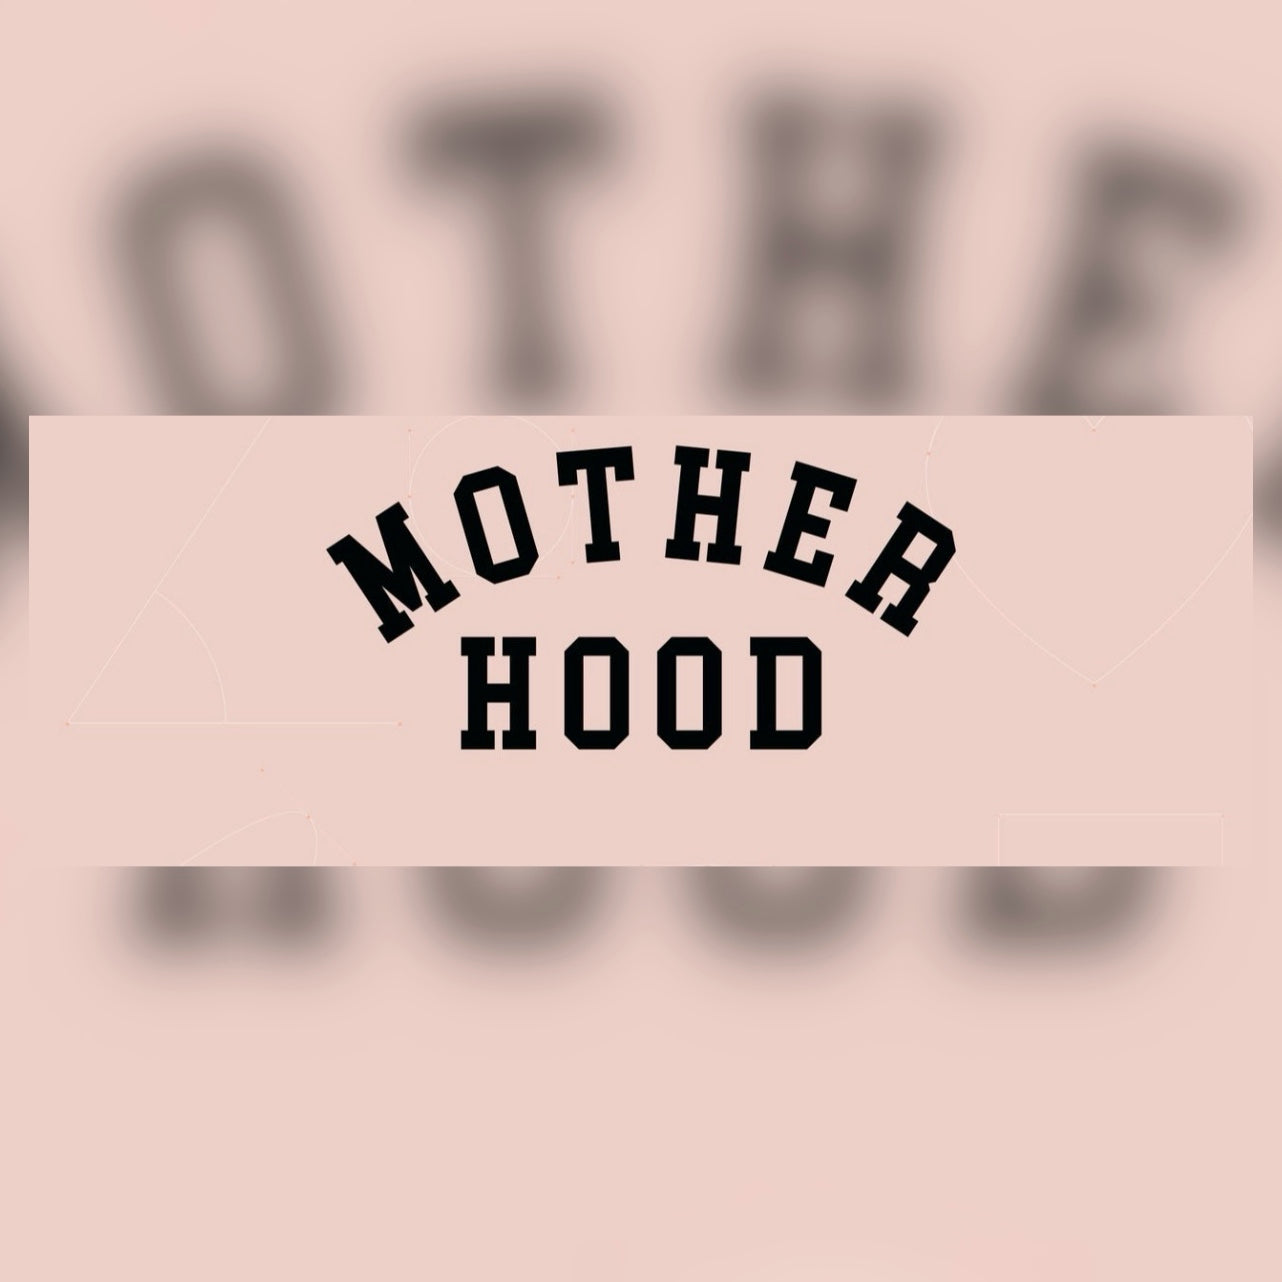 MOTHER HOOD